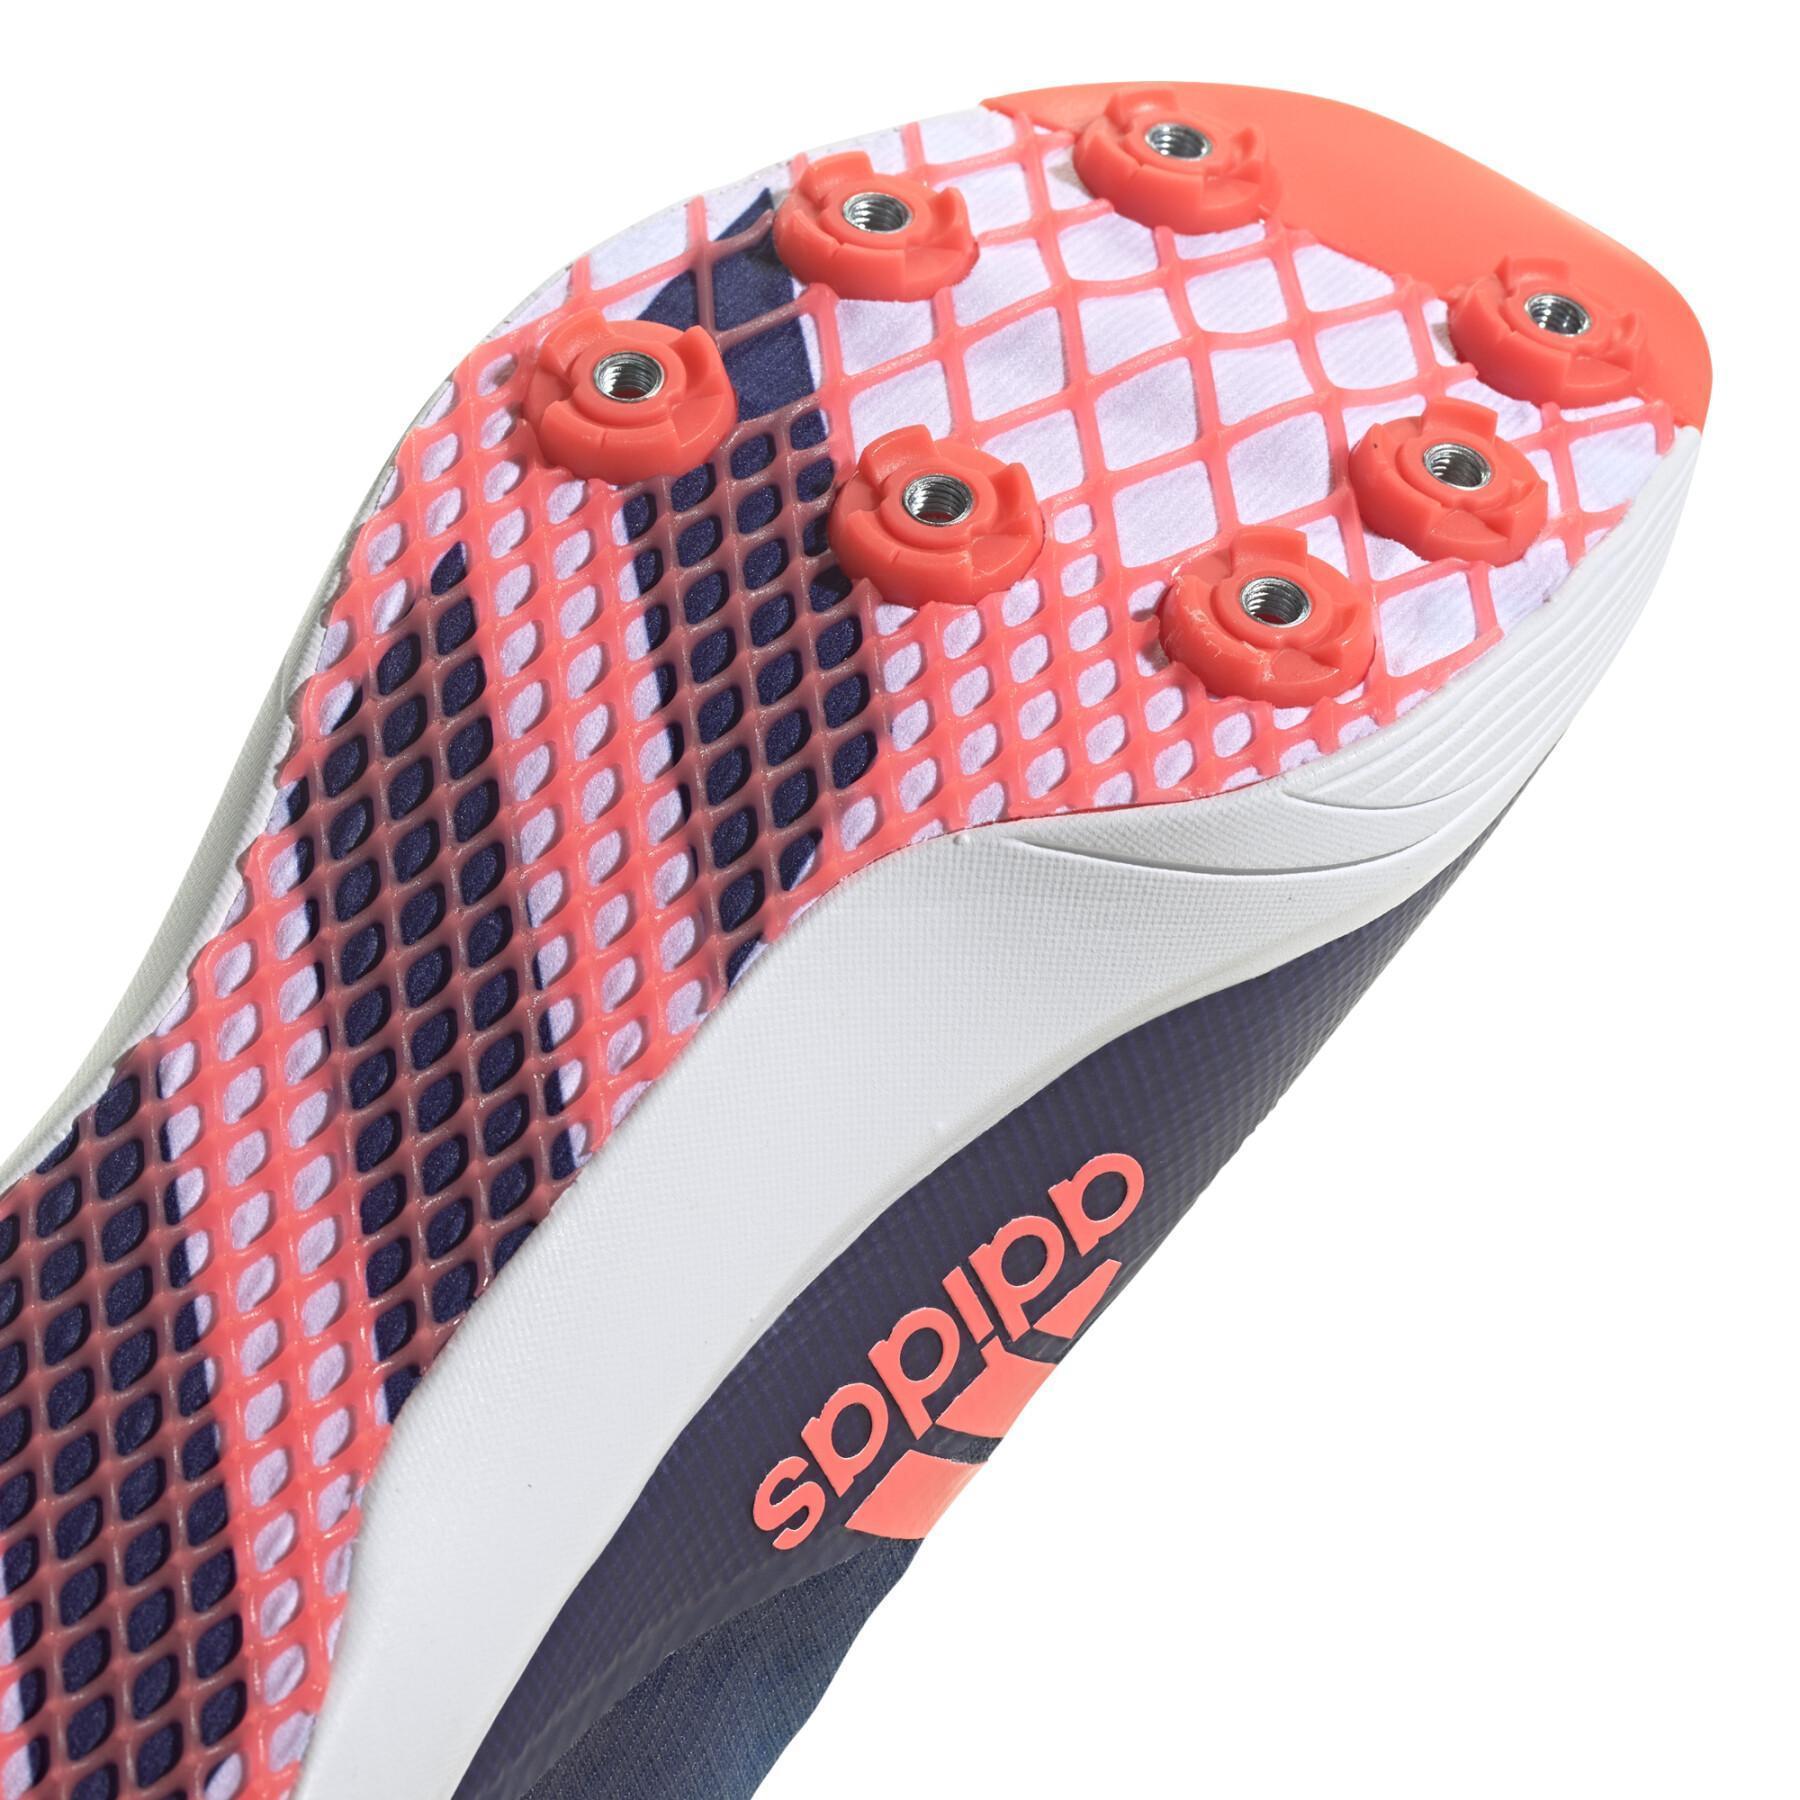 Triple jump and pole vault shoes adidas Adizero